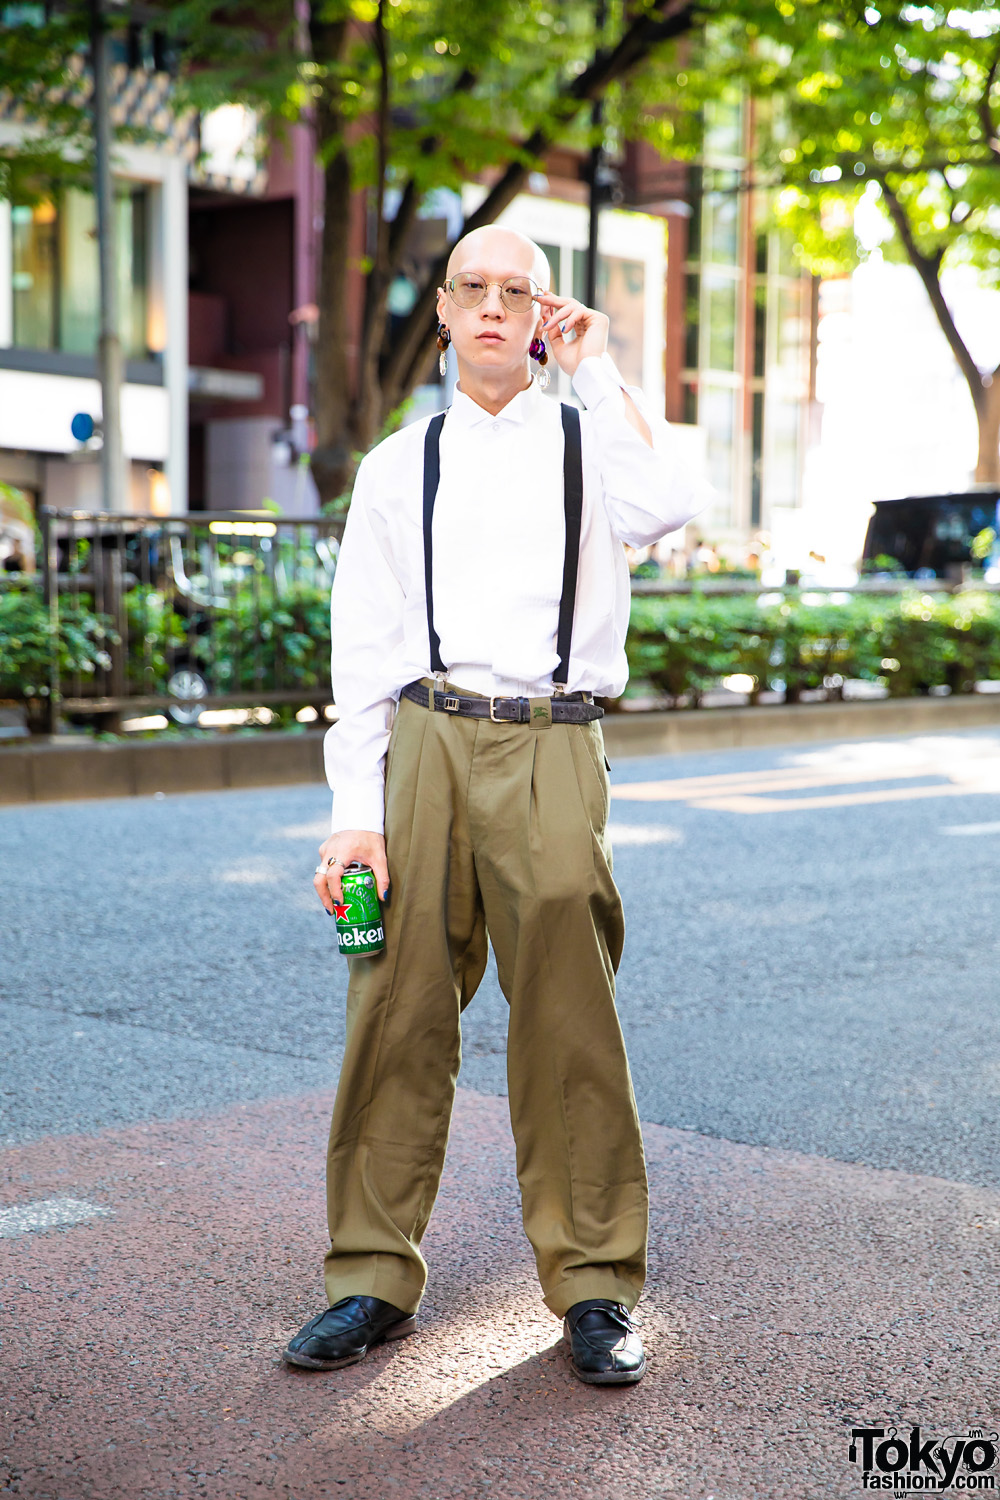 er nok Busk Glatte Dapper Street Style w/ Bull Horn Earrings, Vintage Pleated Shirt, Burberry  Khaki Pants, Suspenders & Saint Laurent Loafers – Tokyo Fashion